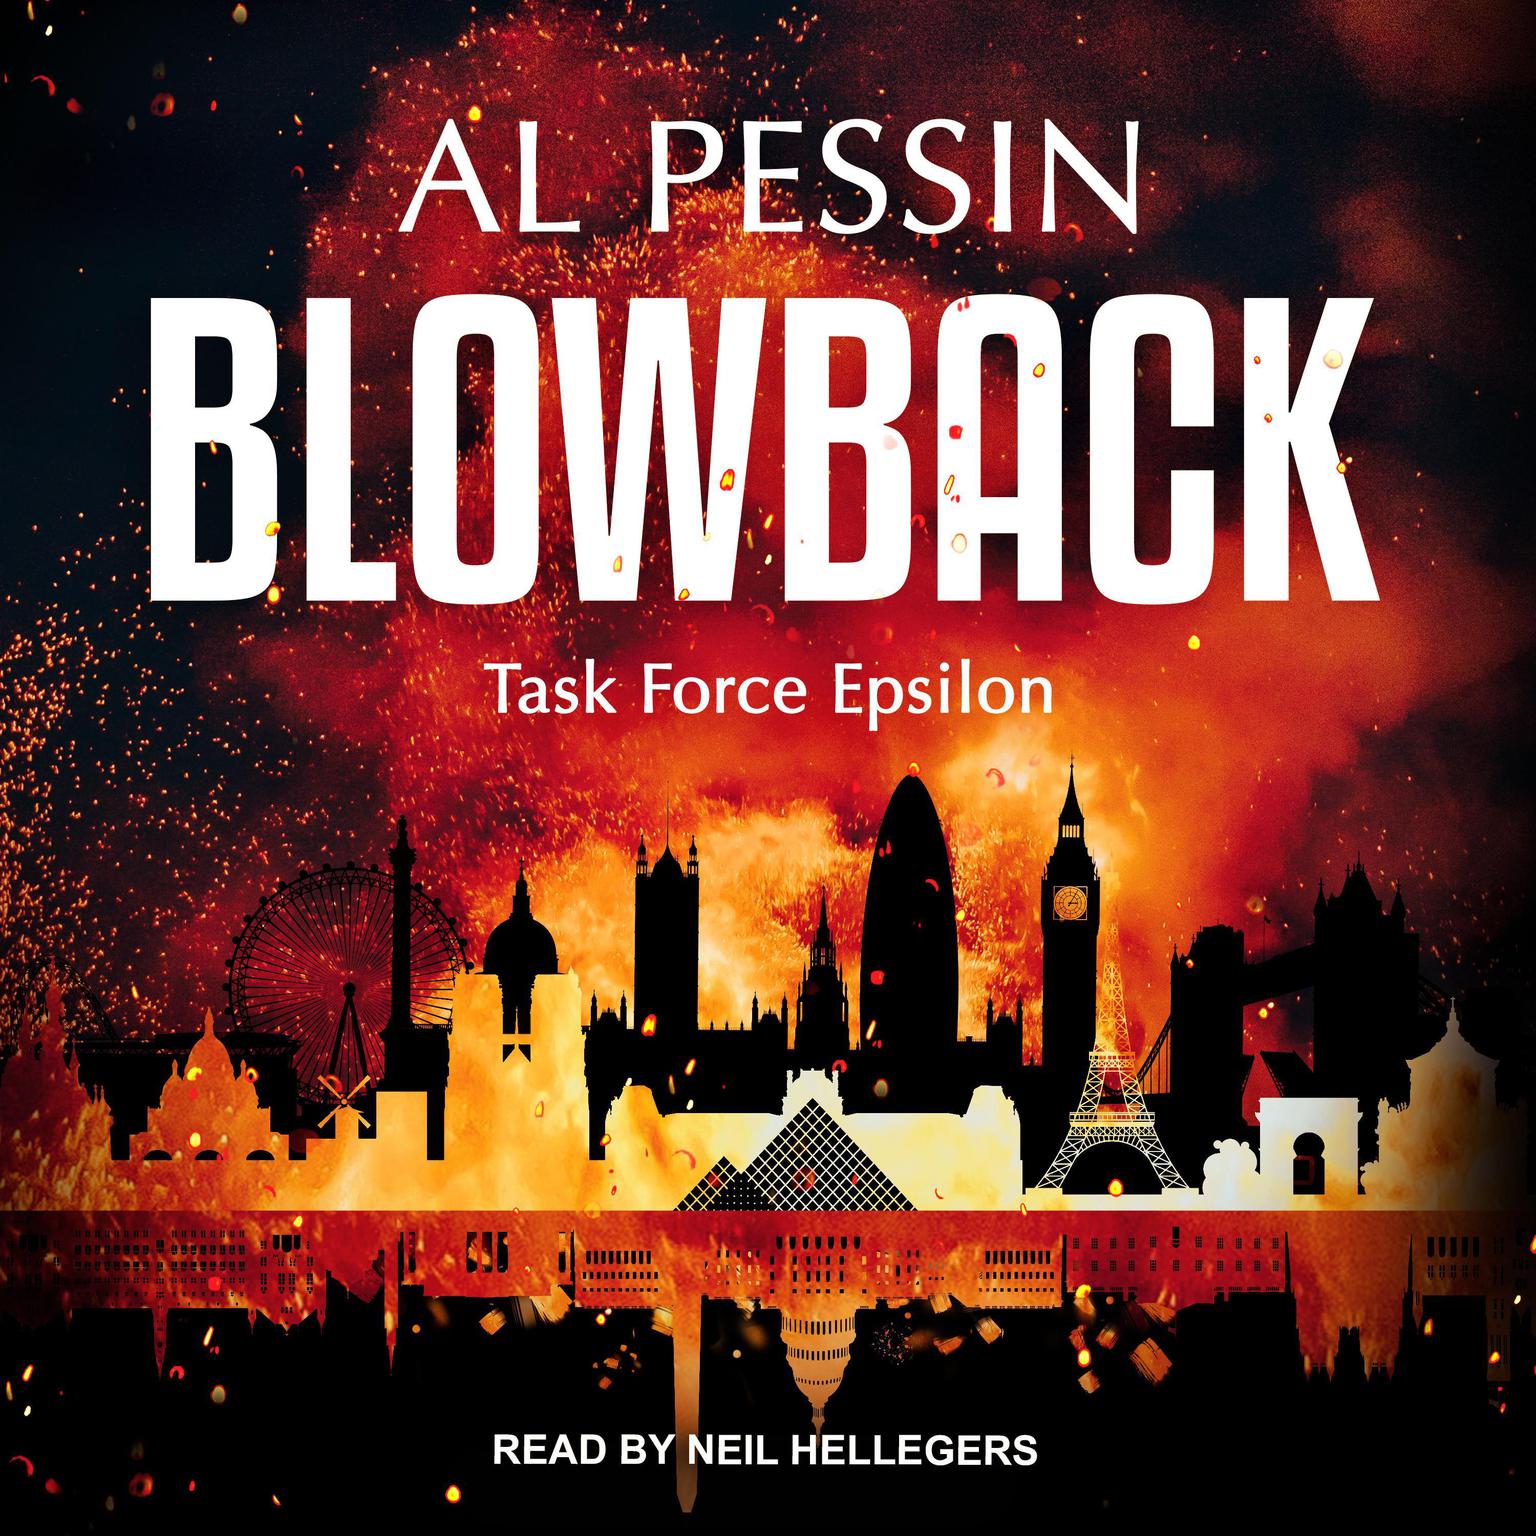 Blowback Audiobook, by Al Pessin